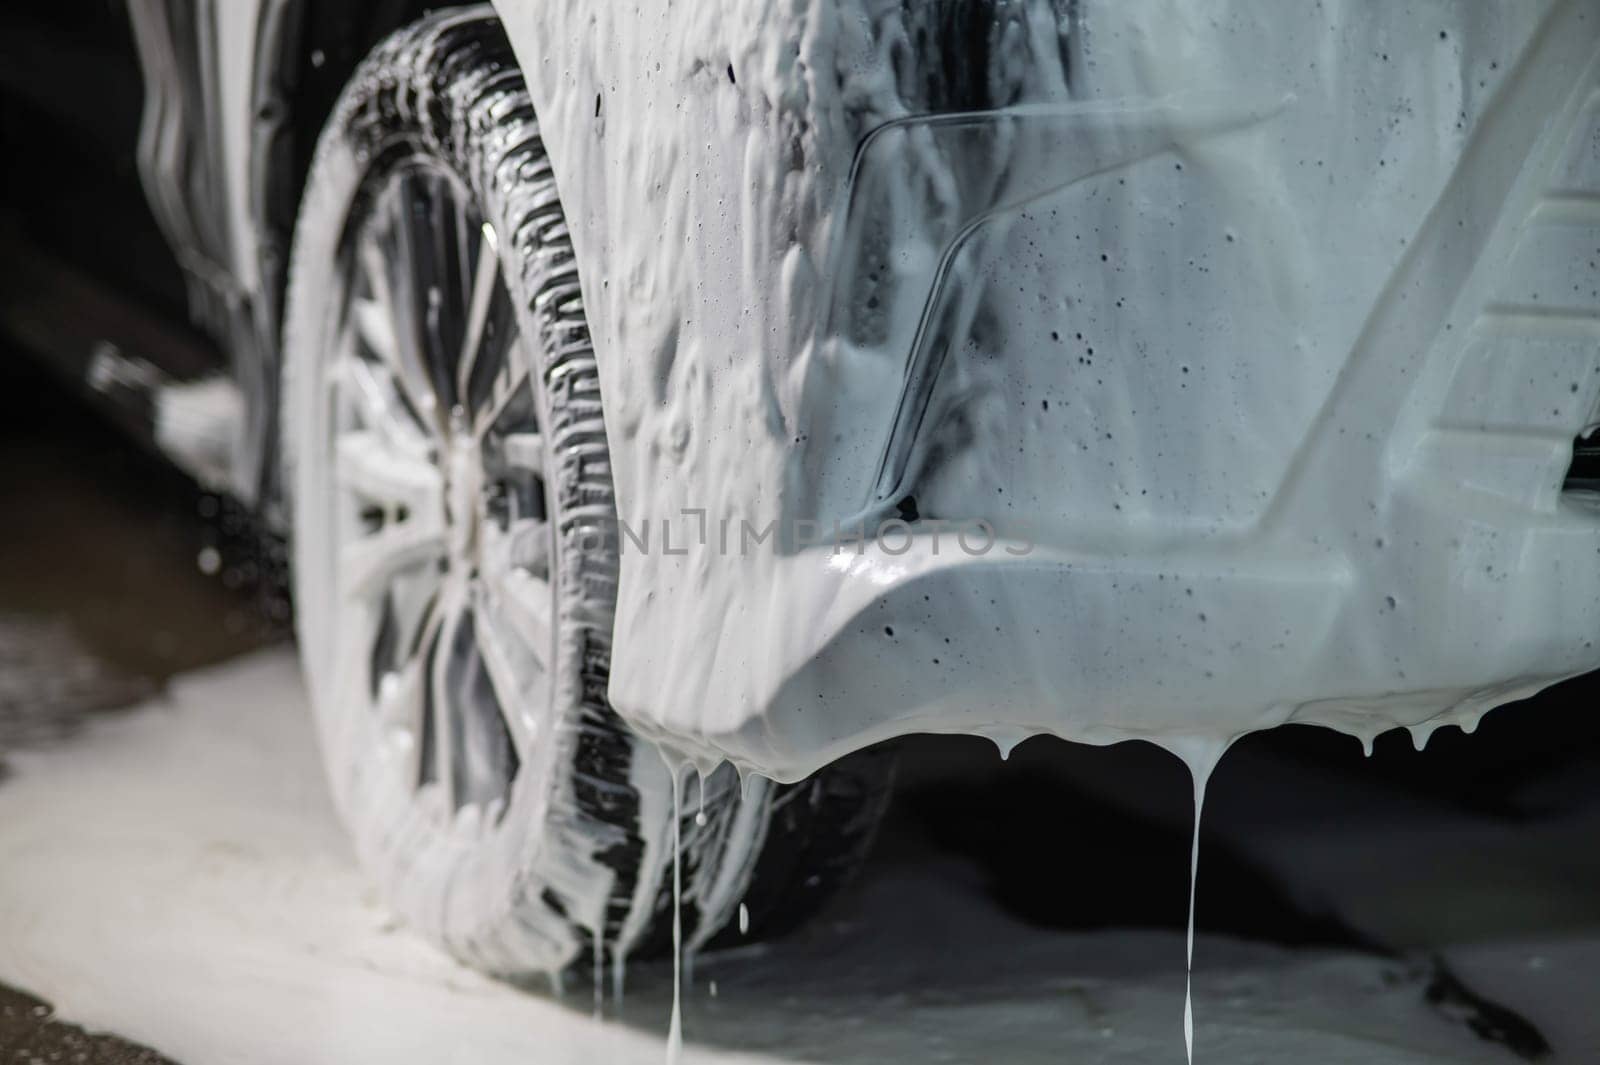 Foam drips from the bumper of a black car. Car wash